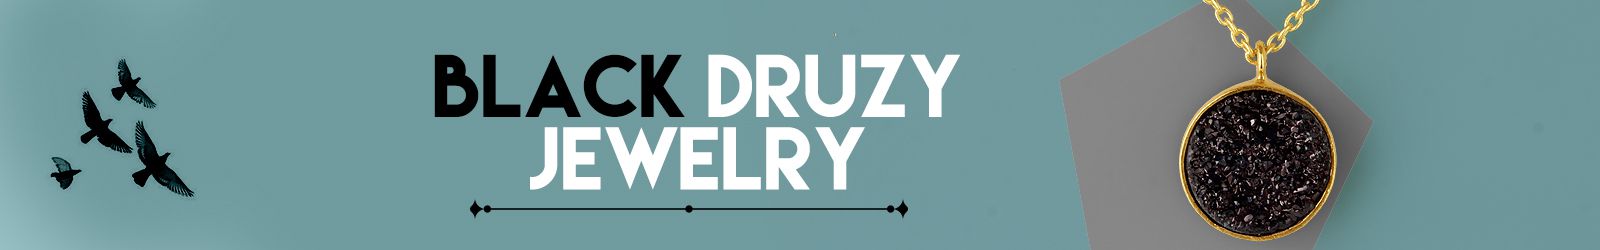 Silver Black Druzy Jewelry Wholesale Supplier